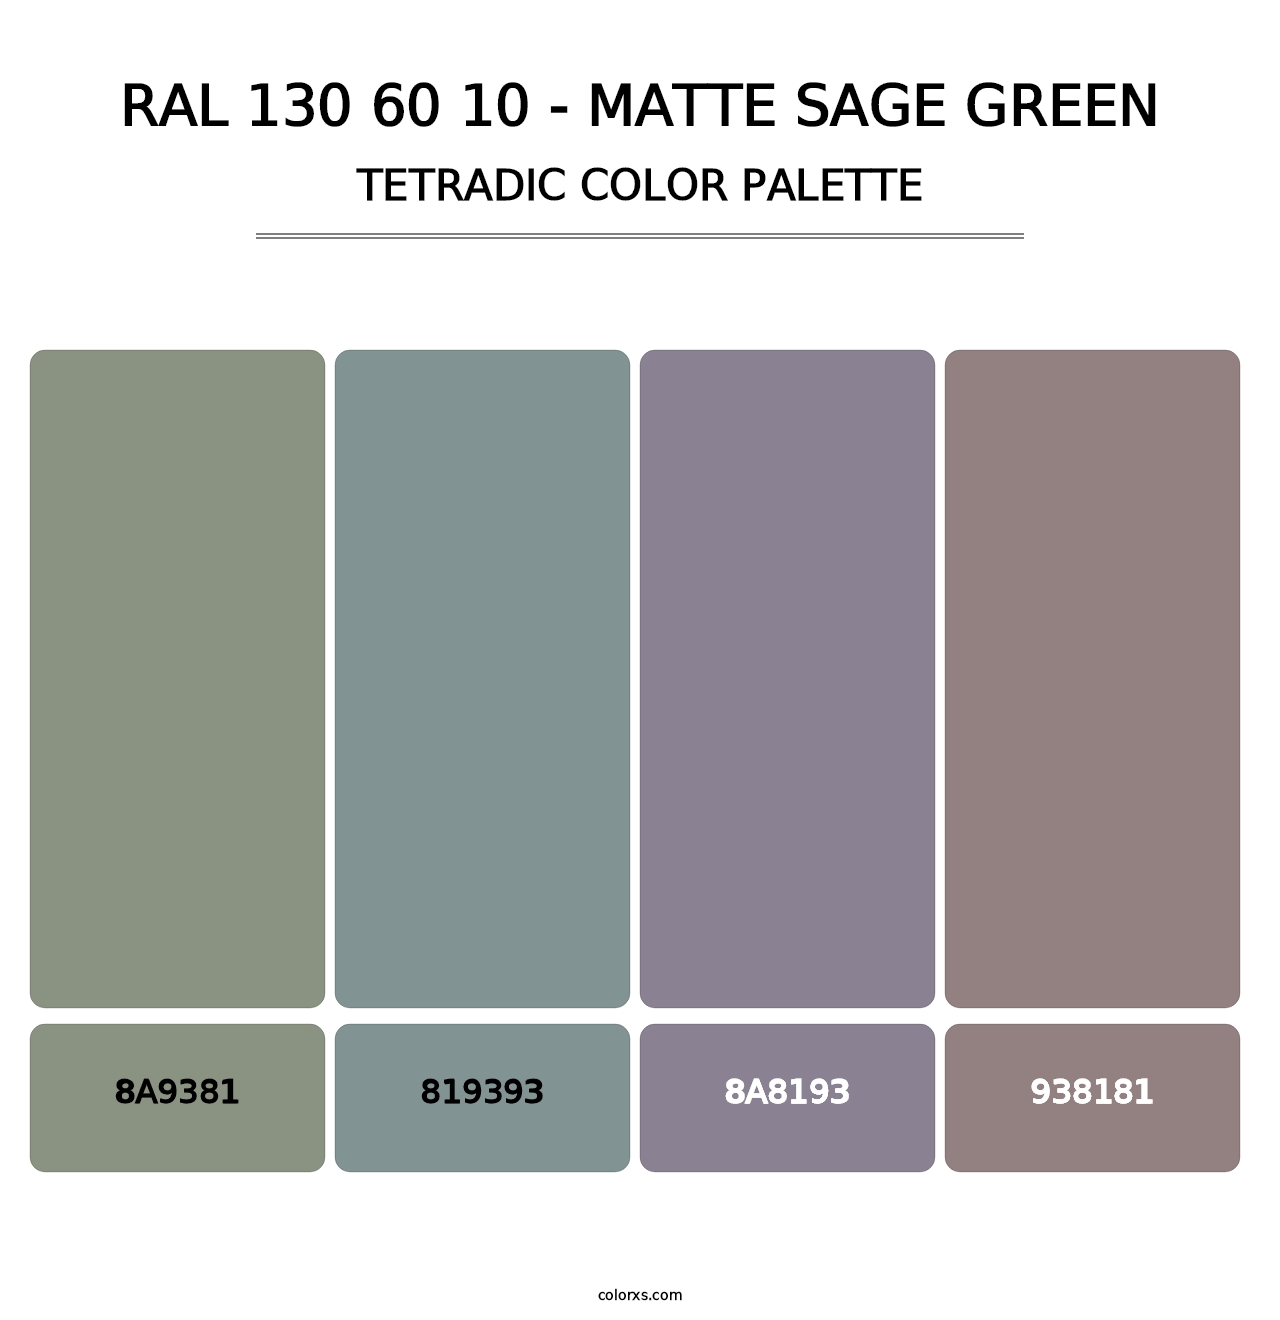 RAL 130 60 10 - Matte Sage Green - Tetradic Color Palette